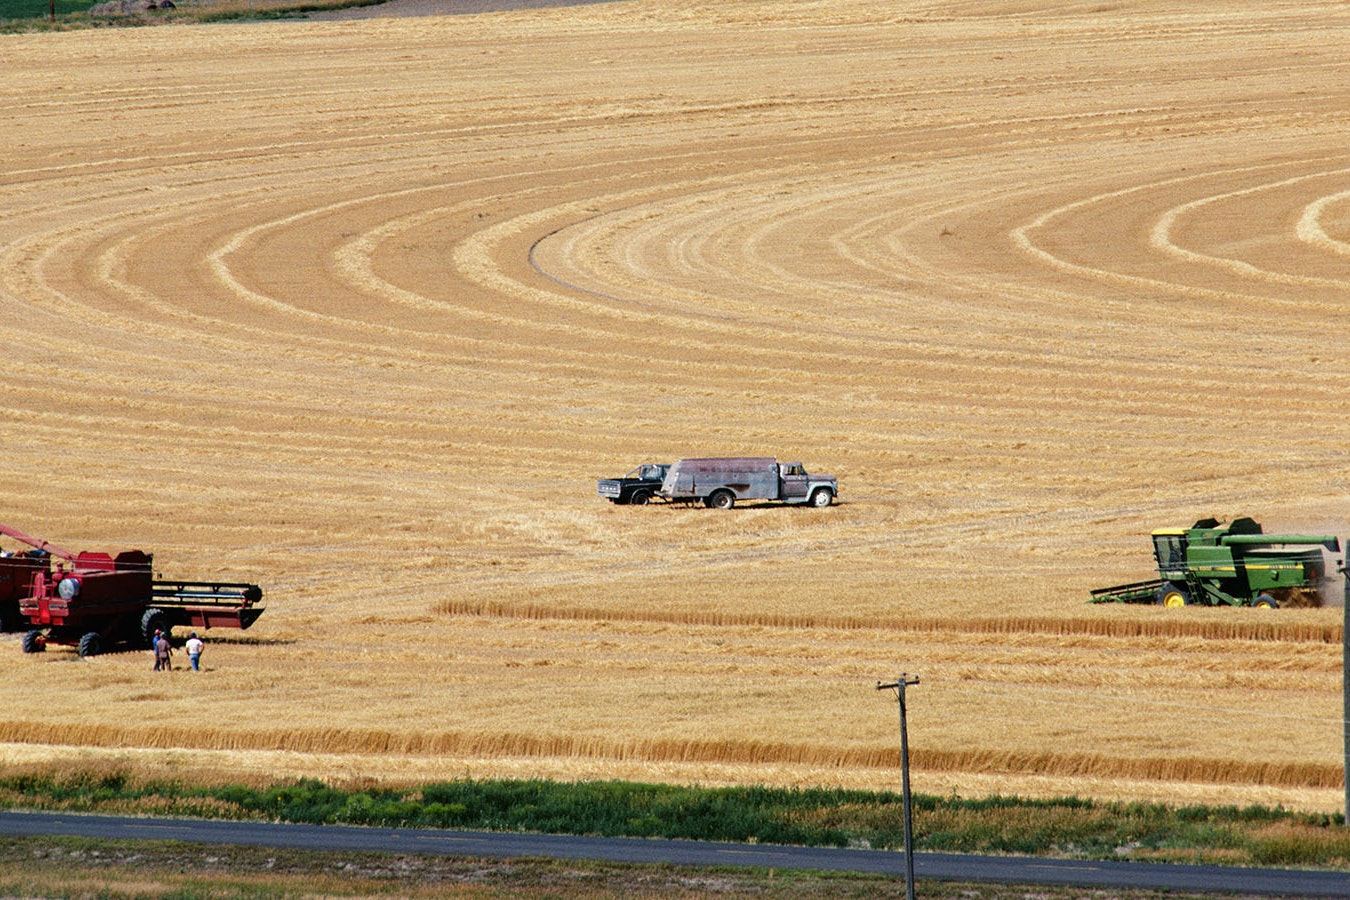 Combines work to harvest wheat in a Laramie County field near Cheyenne.